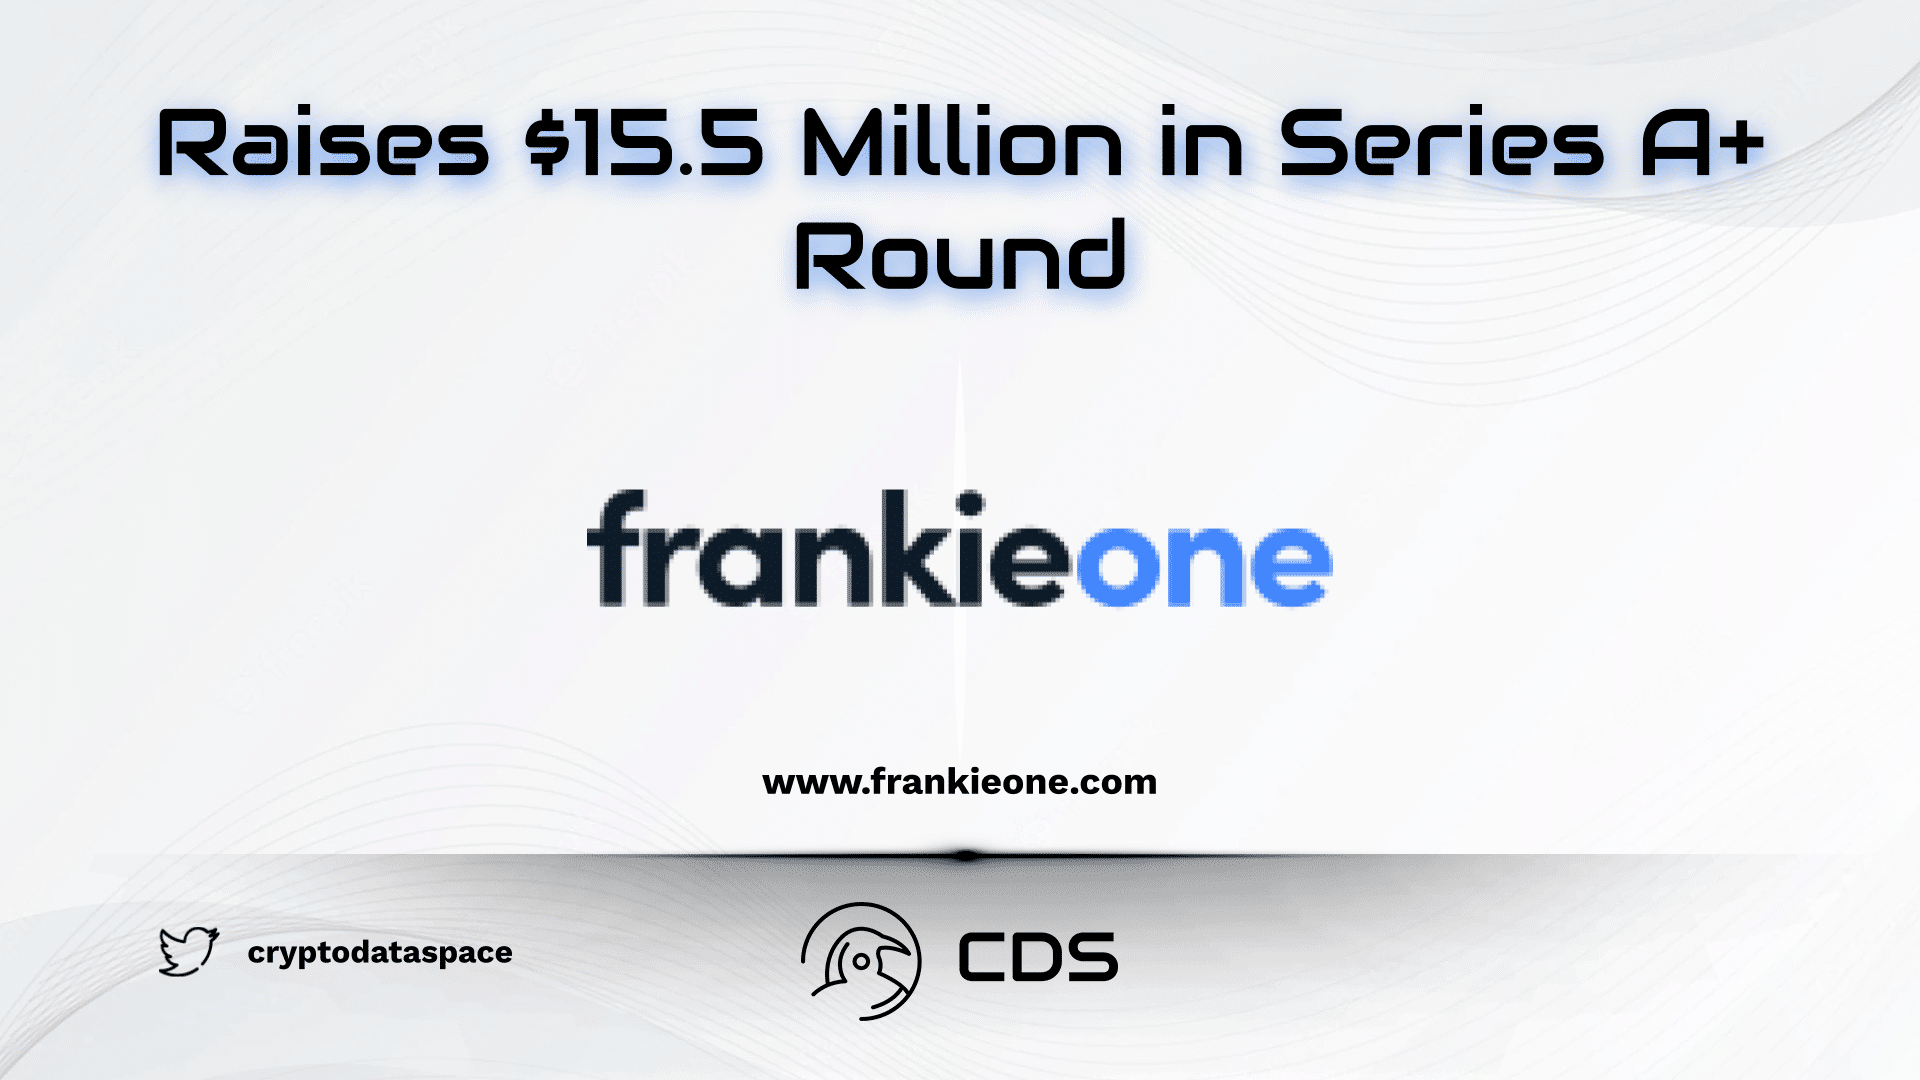 FrankieOne Raises $15.5 Million in Series A+…